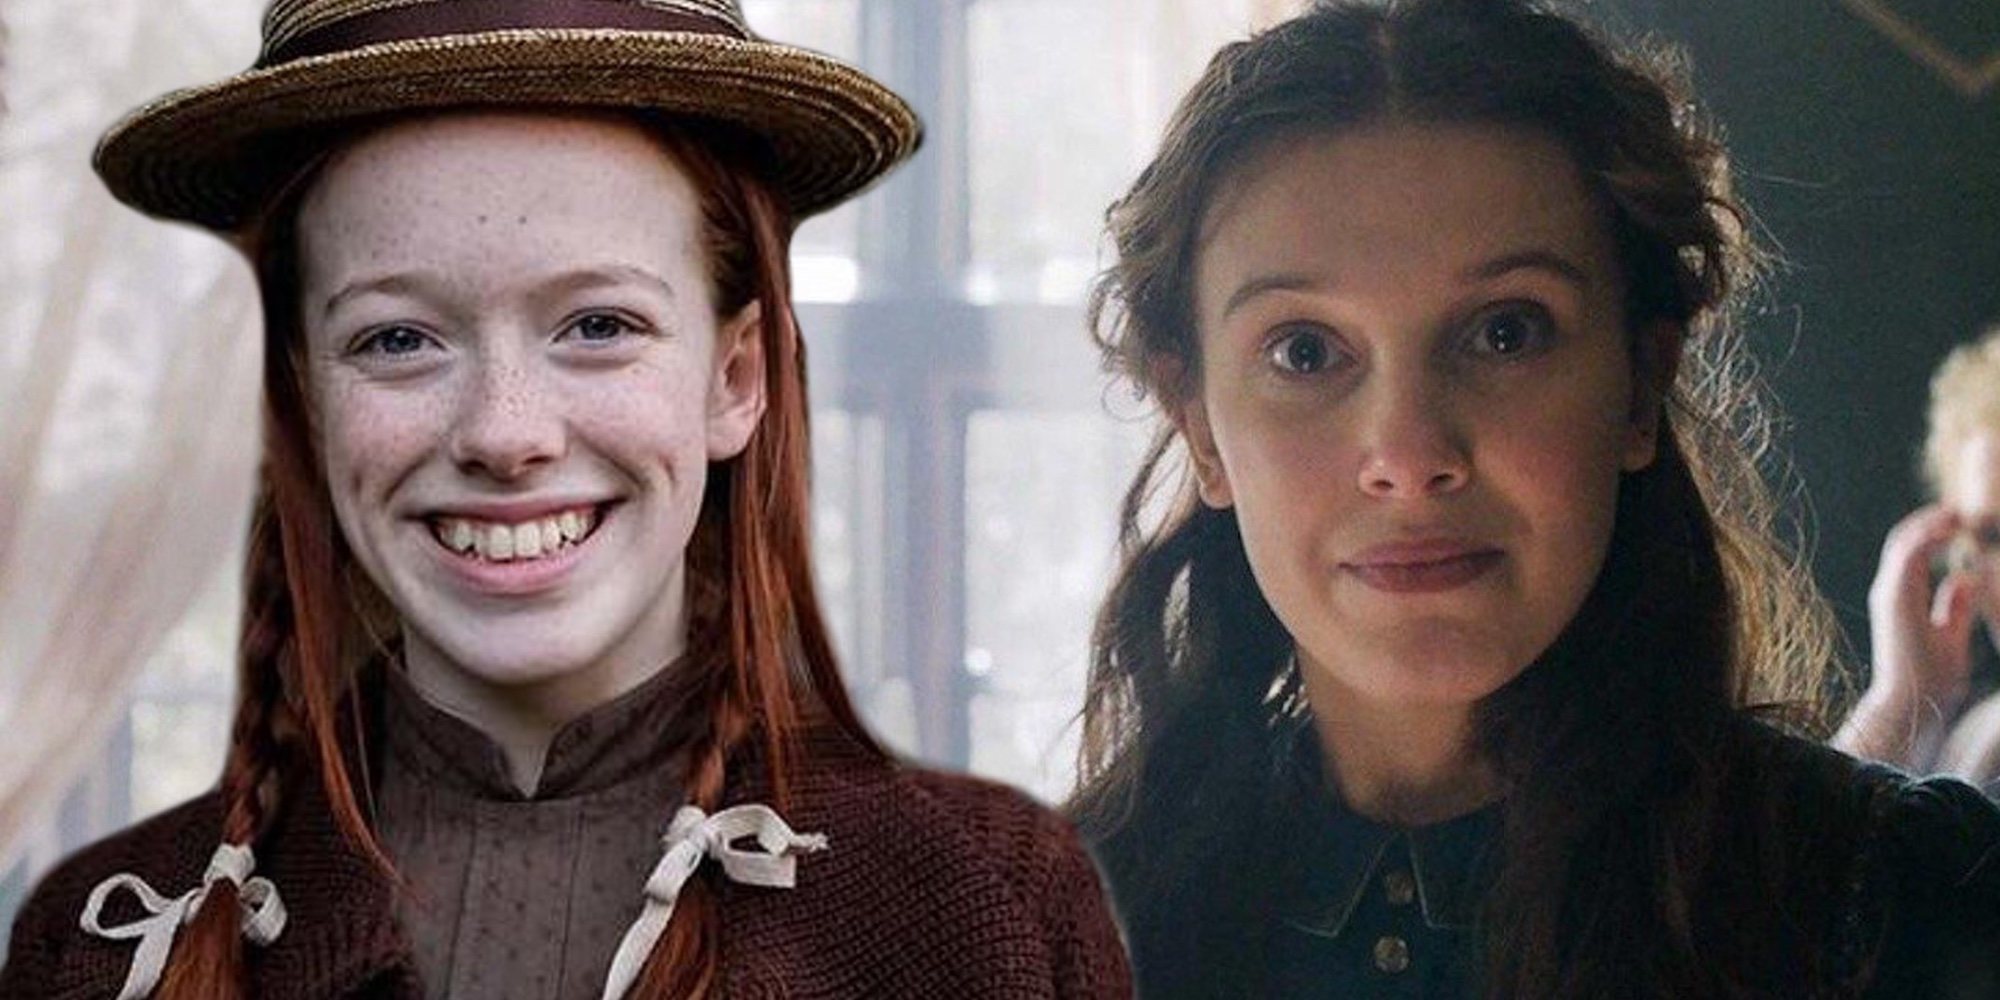 Las increíbles similitudes entre 'Enola Holmes' y 'Anne with an E'